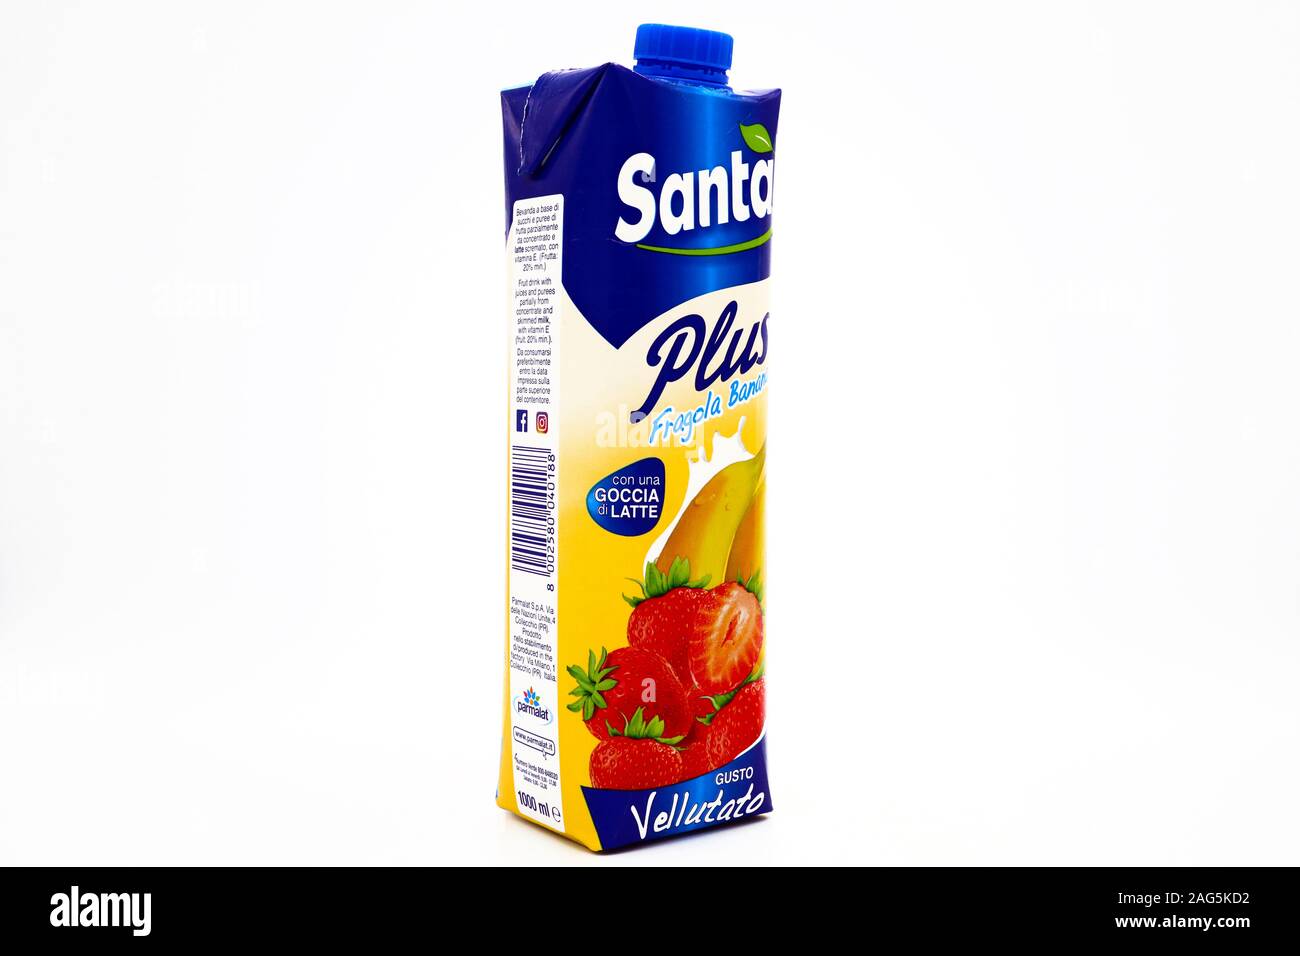 Santal Fruit Juice. Santal is an Italian brand of juices and ...